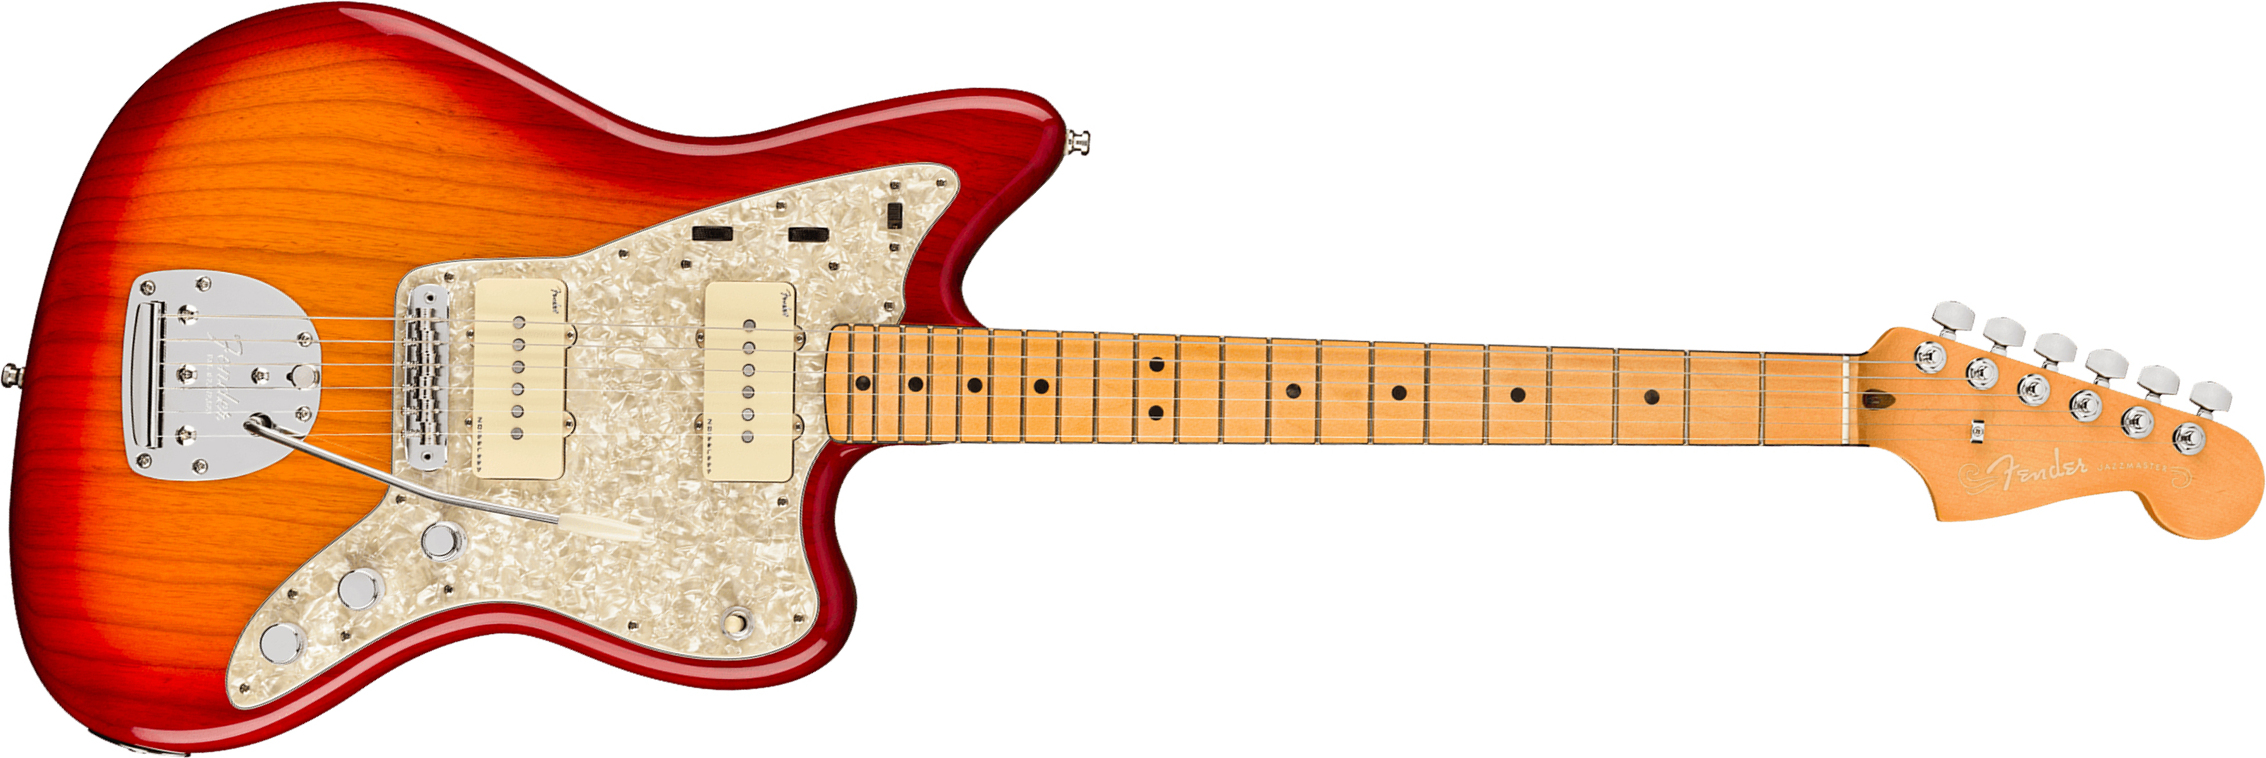 Fender Jazzmaster American Ultra 2019 Usa Mn - Plasma Red Burst - Retro rock electric guitar - Main picture